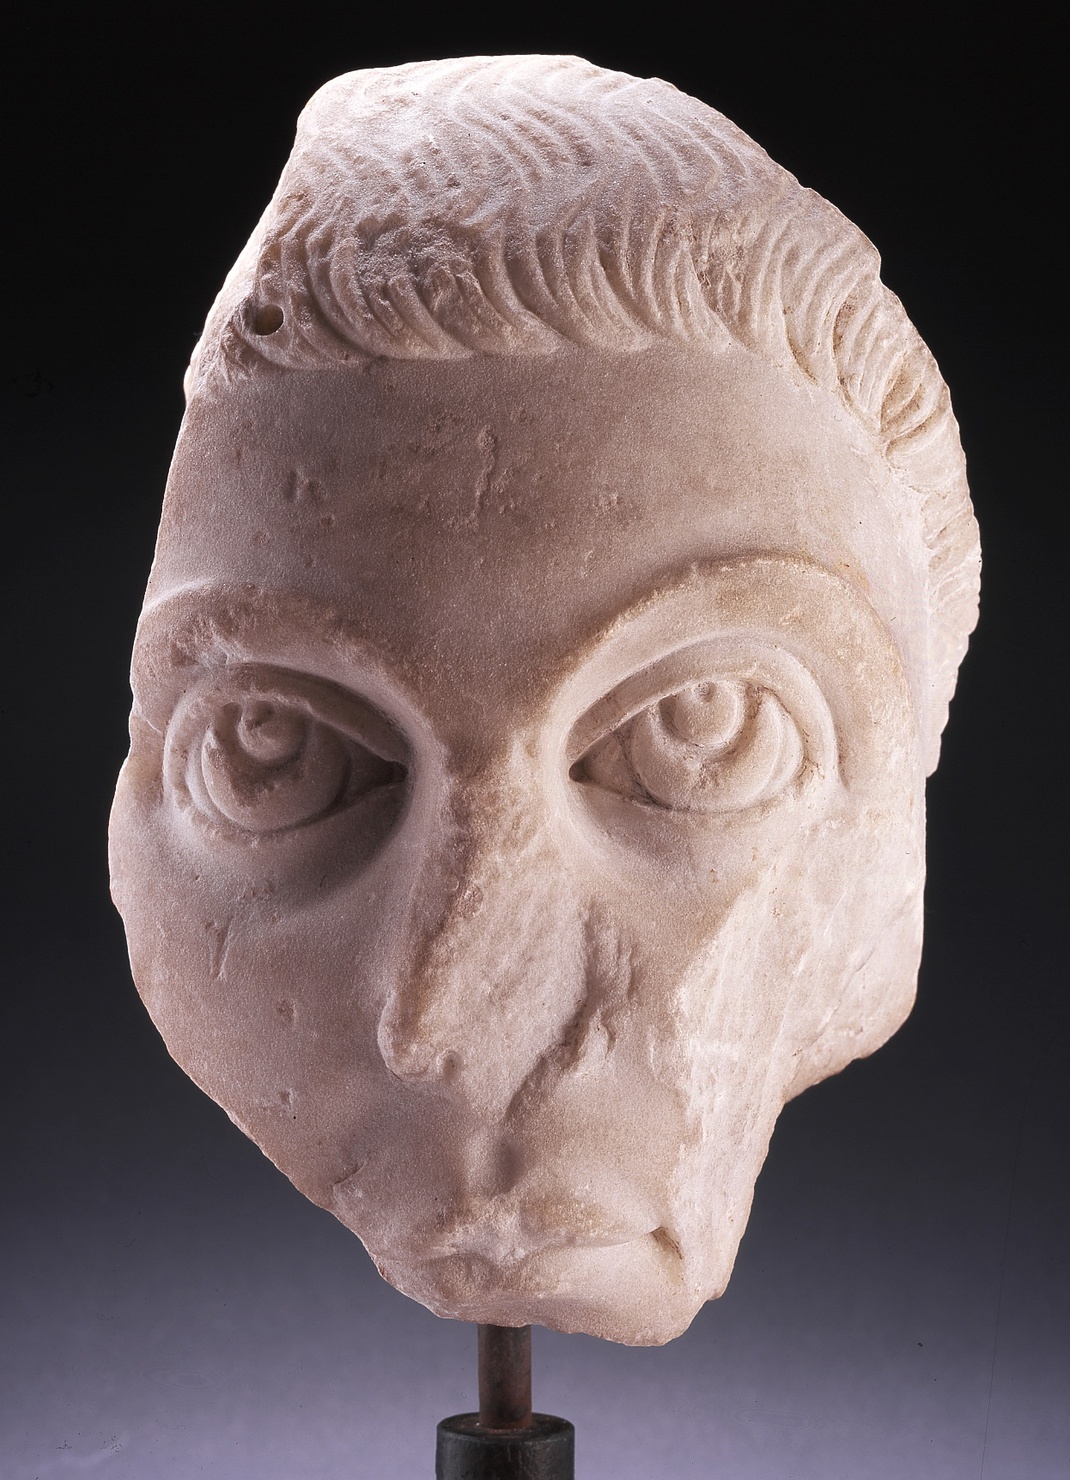 volto maschile (scultura, frammento) - manifattura tardo antica (sec. V)